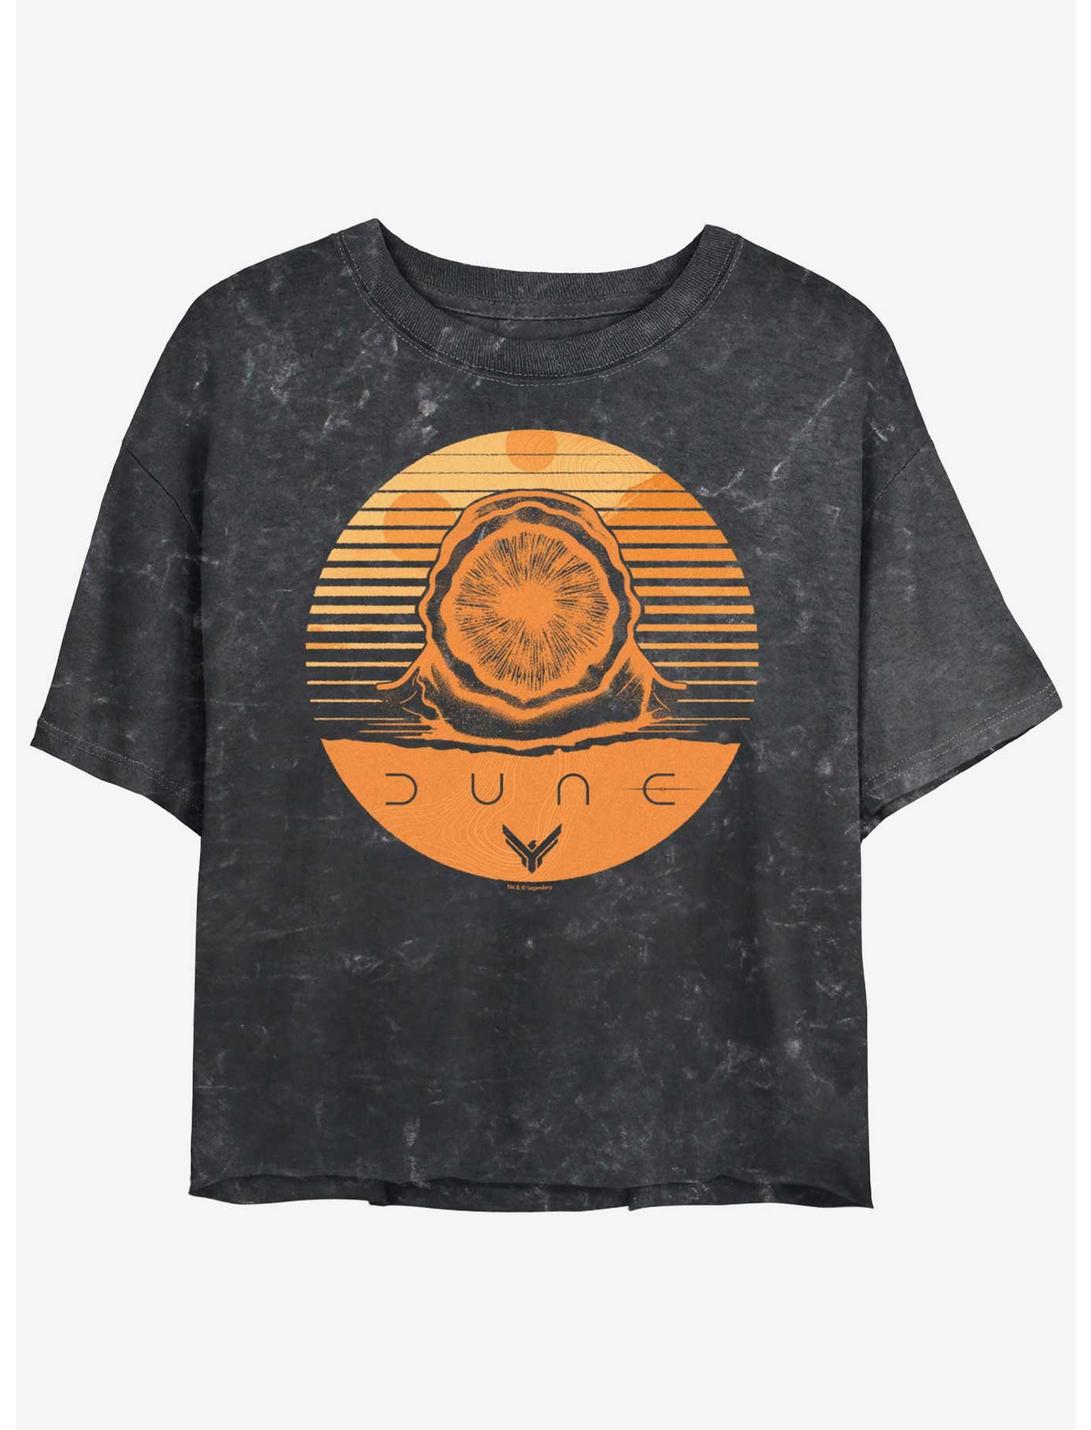 Dune Arrakis Sandworm Stamp Mineral Wash Womens Crop T-Shirt, BLACK, hi-res